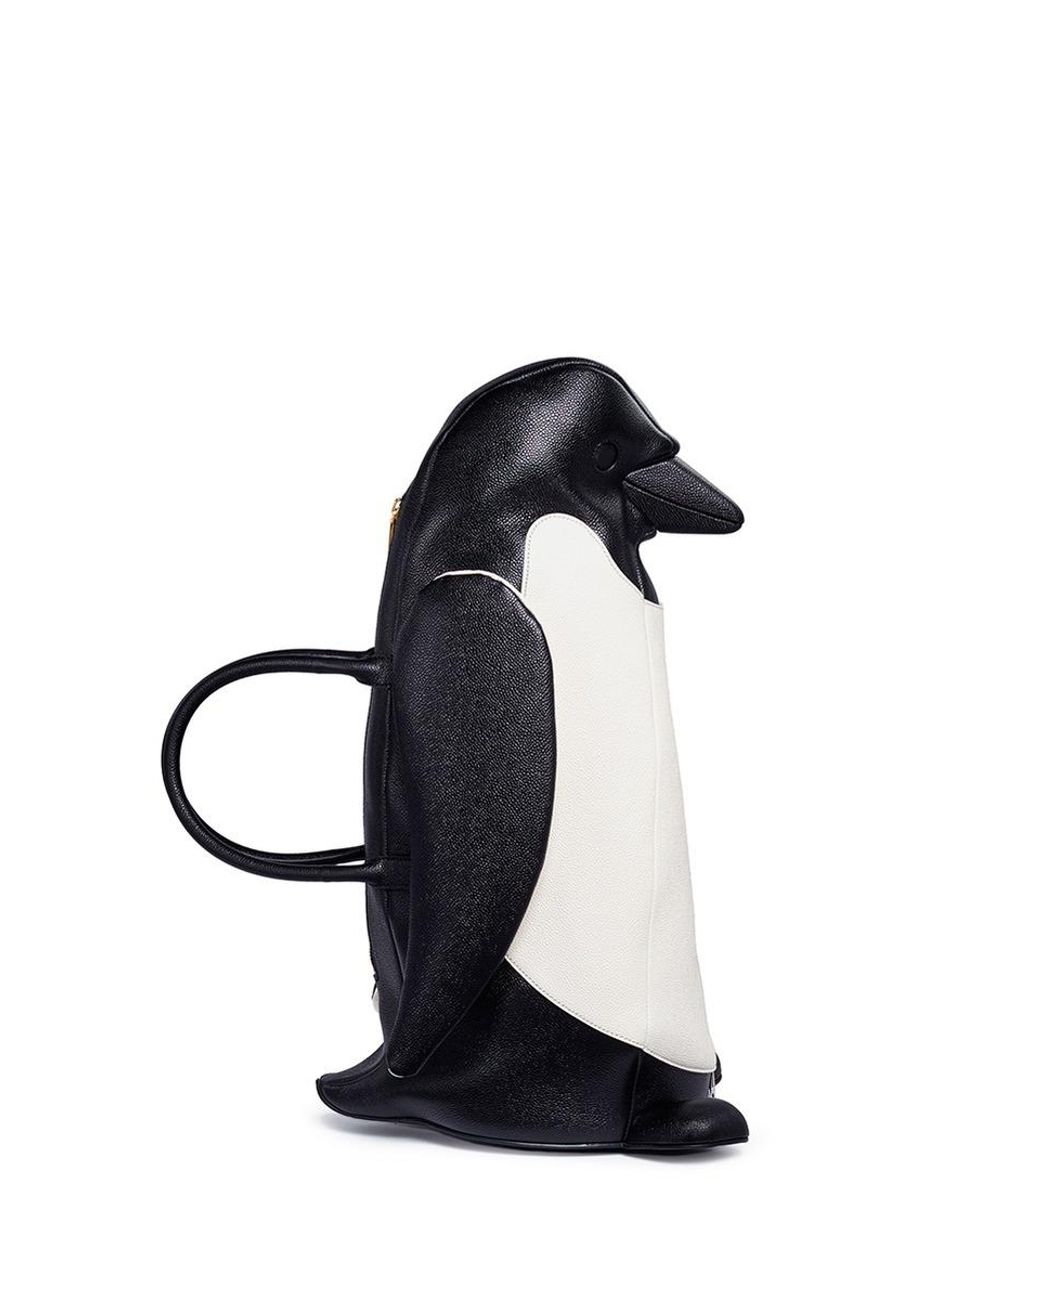 Thom Browne Penguin Pebble Leather Bag in Black | Lyst